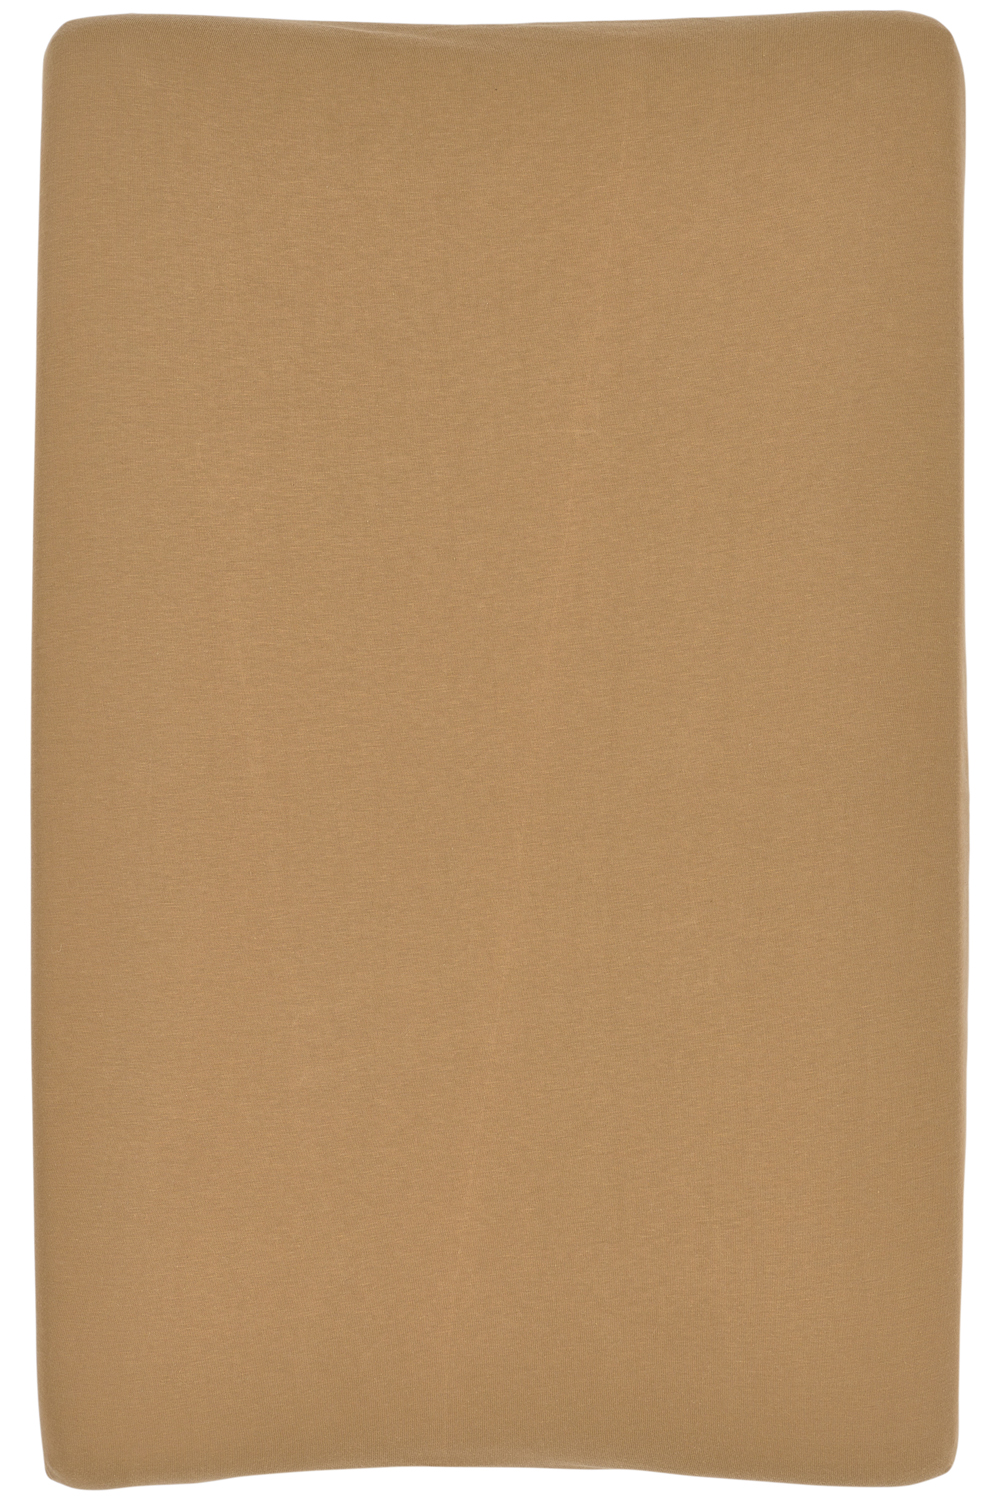 Aankleedkussenhoes Basic Jersey - Toffee - 50x70cm